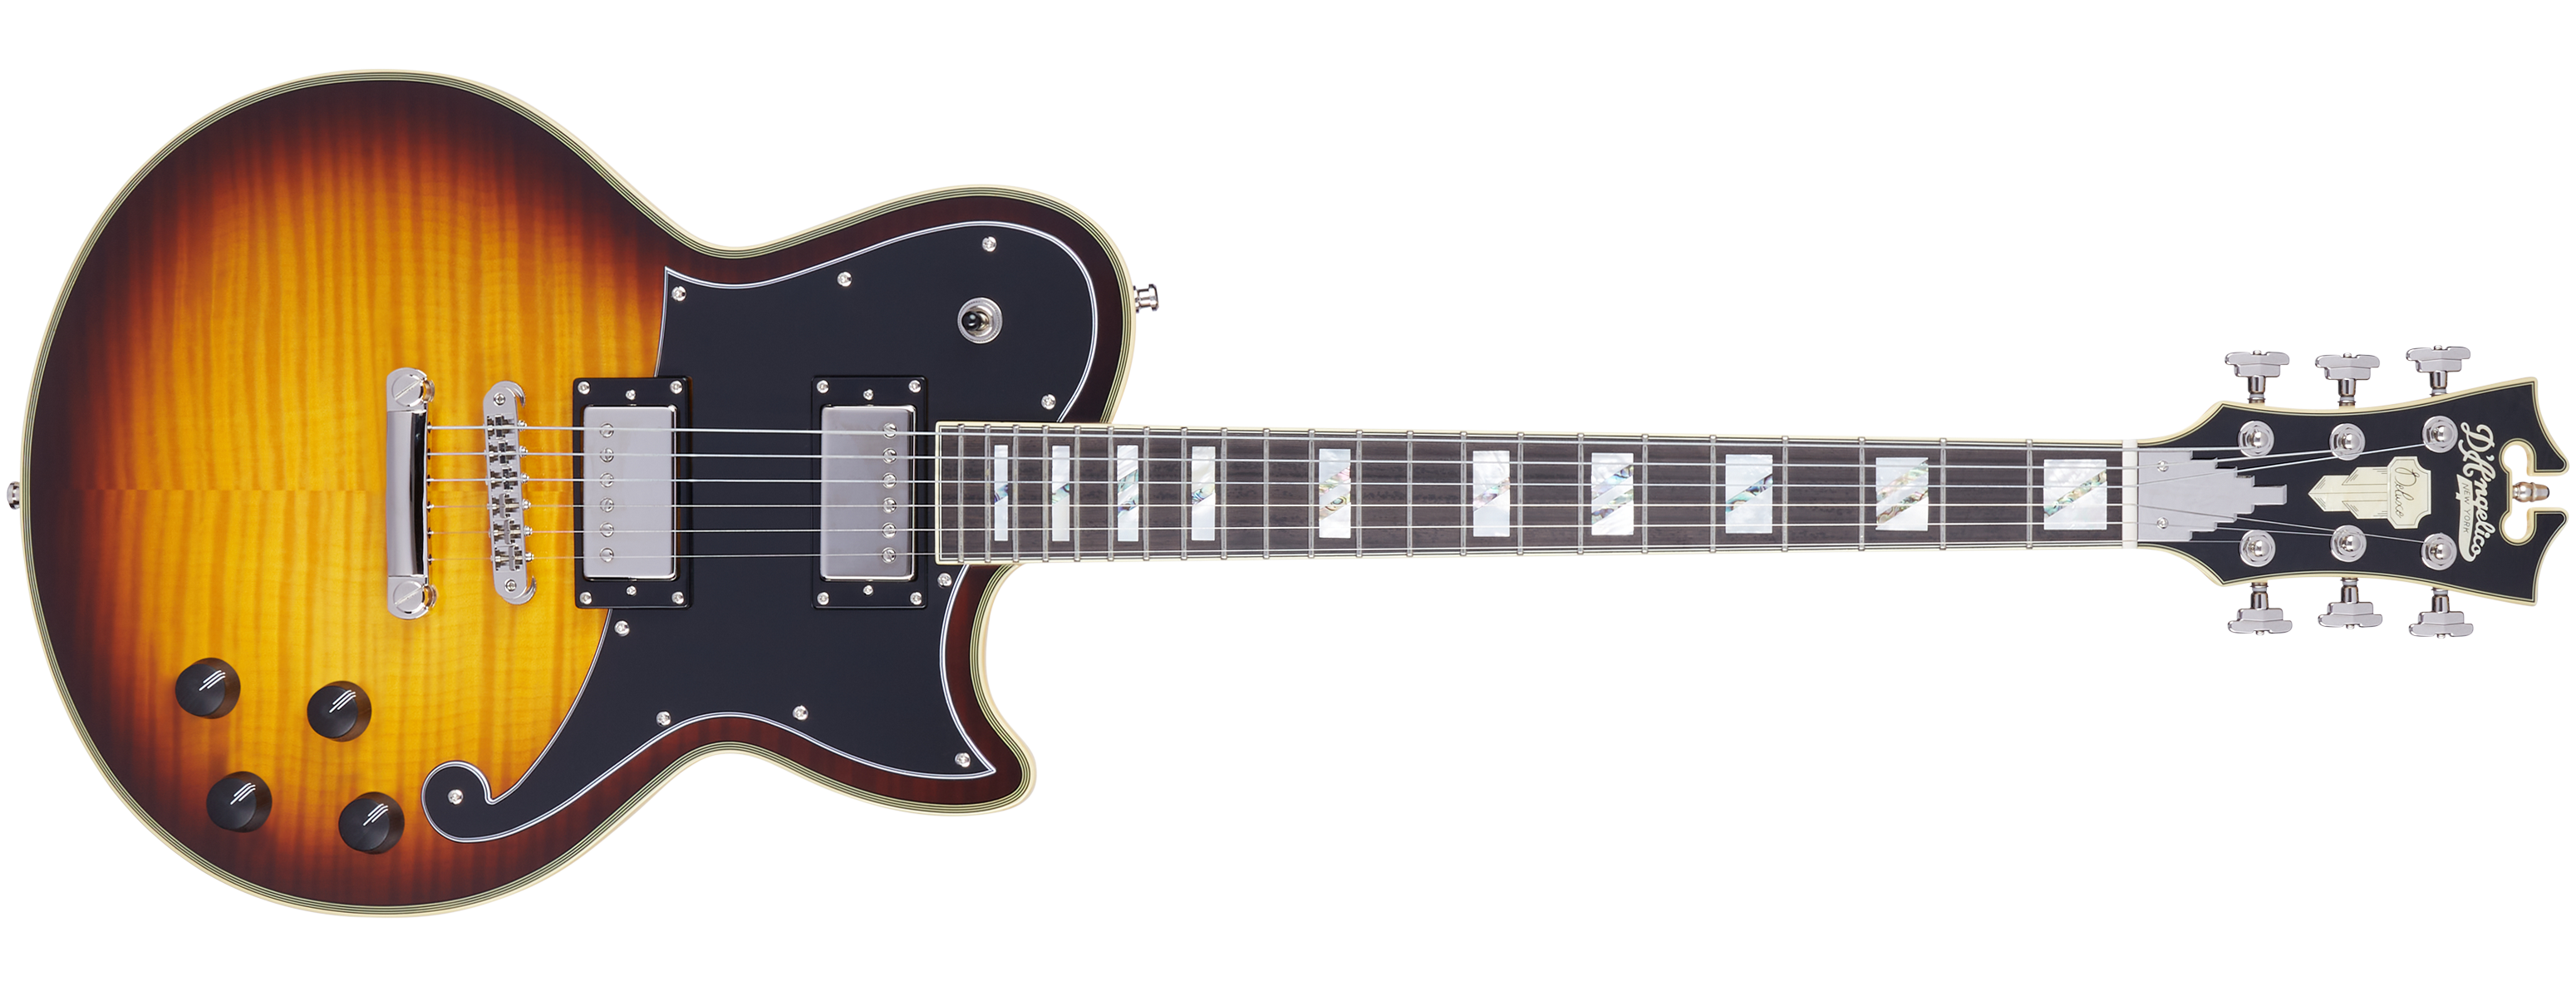 D'Angelico Deluxe Atlantic Electric Guitar With Stopbar Tailpiece Vintage Sunburst DADATLVSBNS